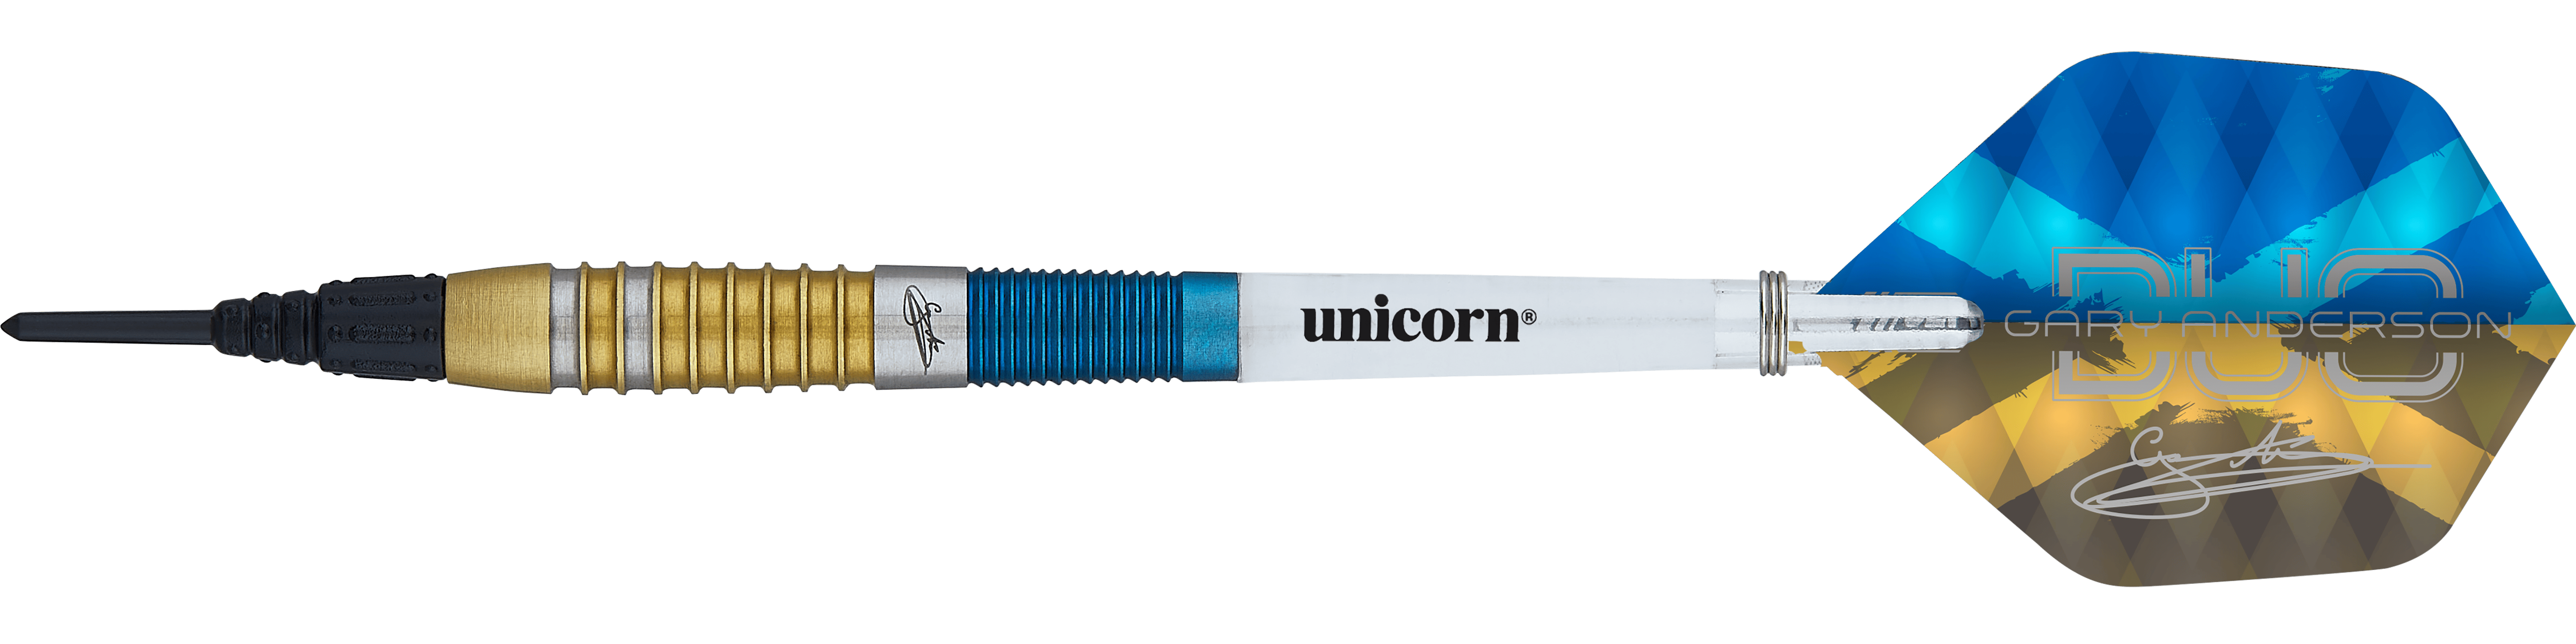 Unicorn Gary Anderson Duo Softdarts